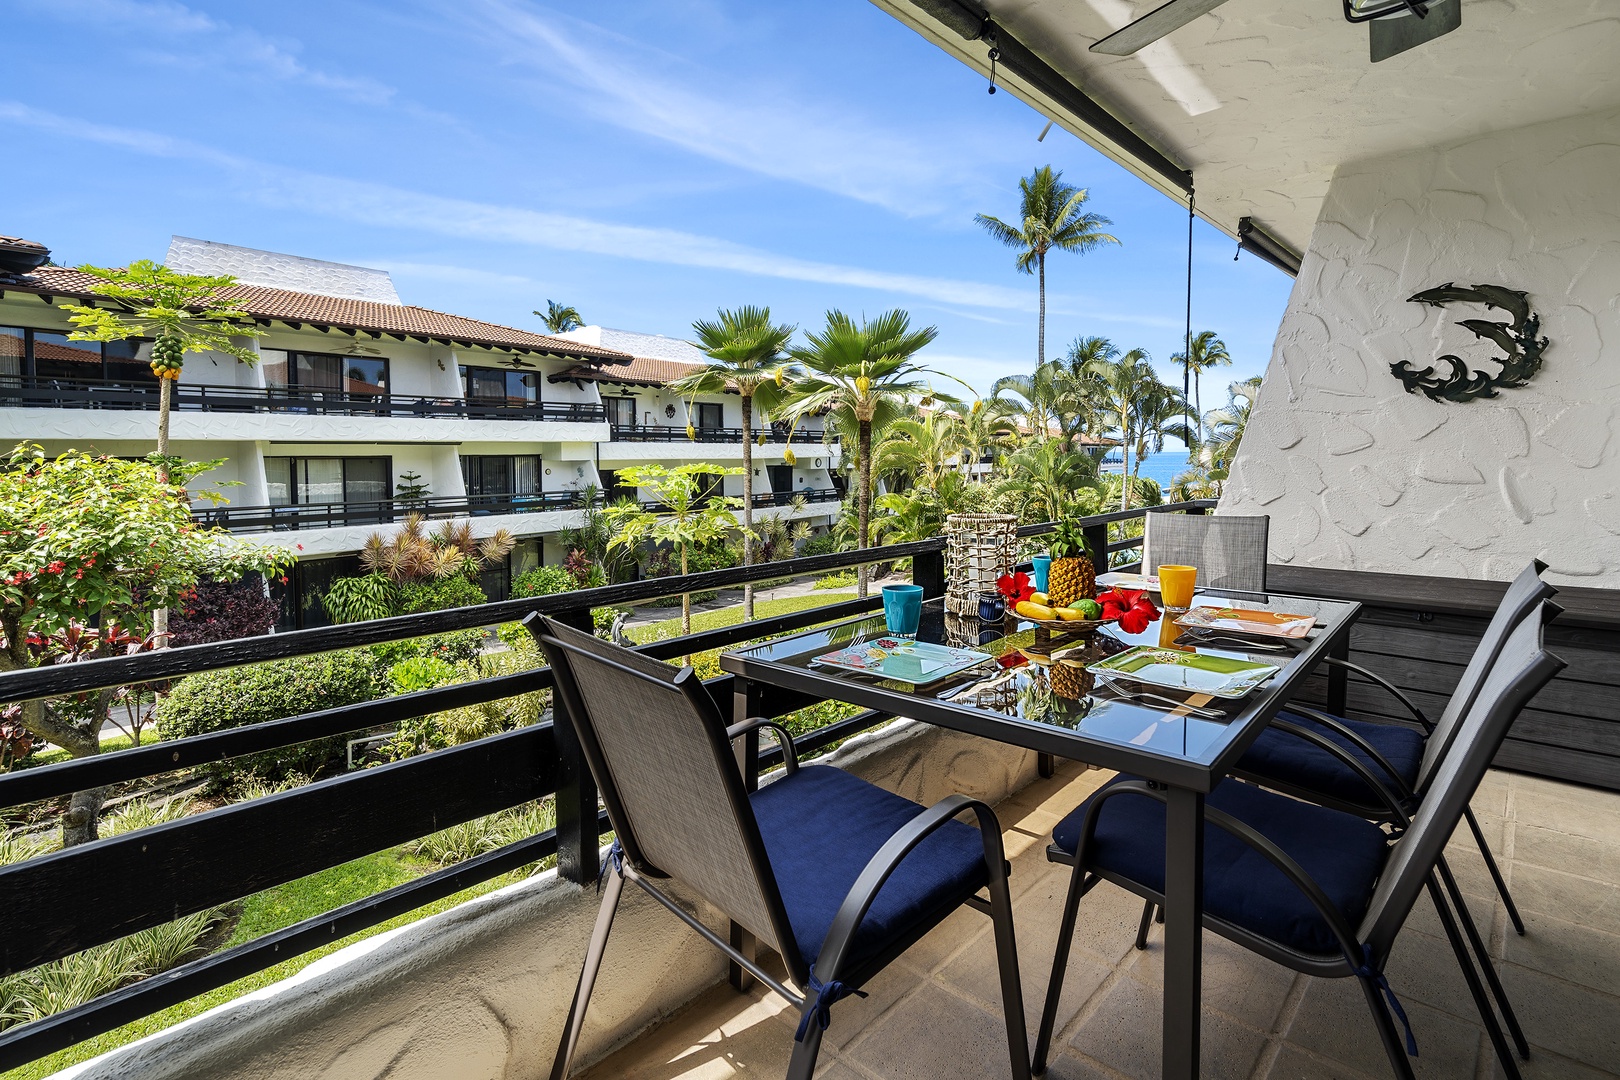 Kailua Kona Vacation Rentals, Casa De Emdeko 222 - Roll down shades can be used to block direct sunlight